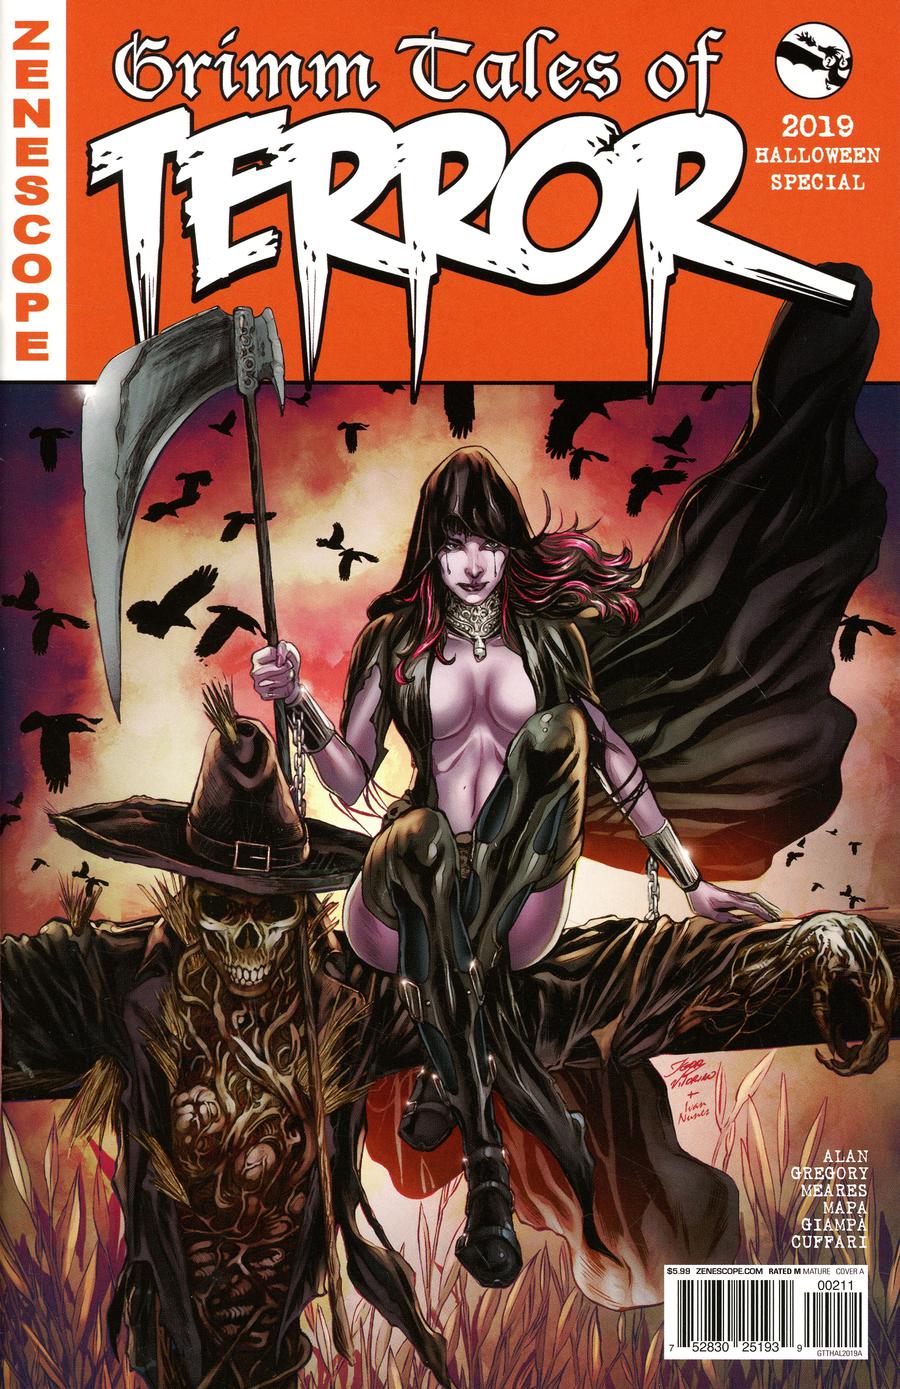 Grimm Fairy Tales Presents Grimm Tales Of Terror 2019 Halloween Edition #1 Cover A Igor Vitorino